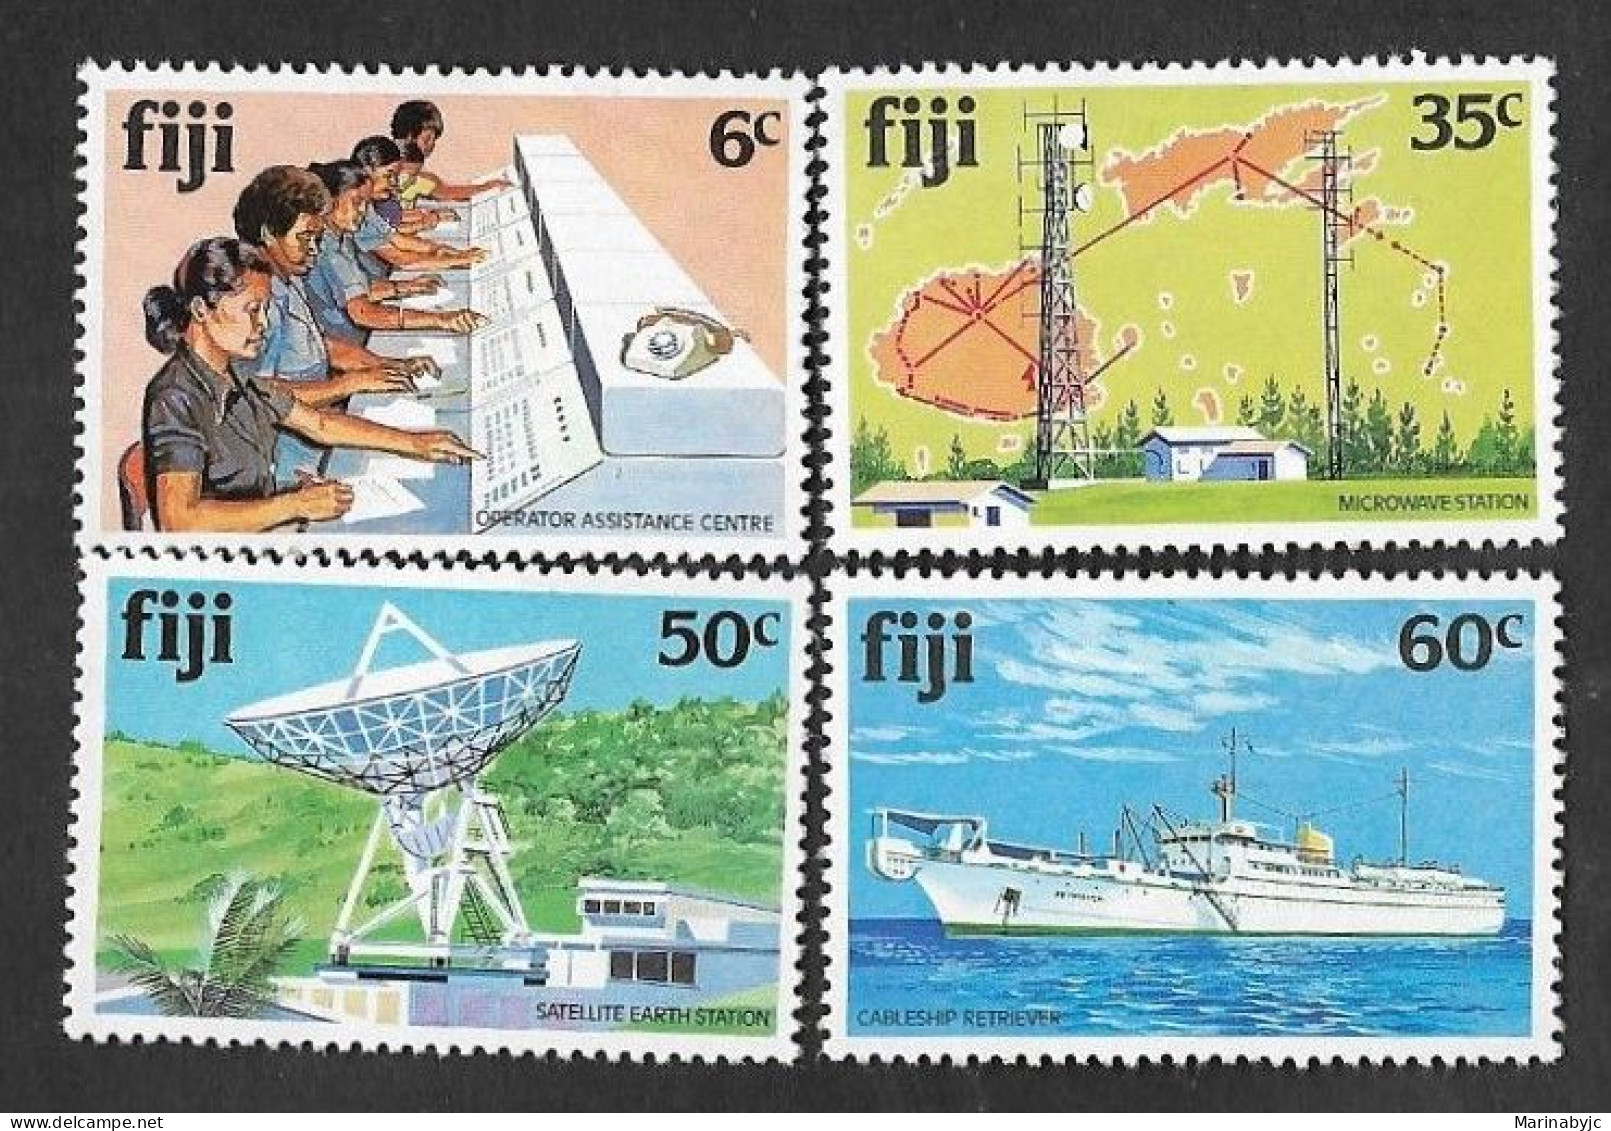 SD)1981 FIJI COMPLETE SERIES TELECOMMUNICATIONS, ASSISTANCE CONTROL, STATION, SATELLITE, BOAT, 4 BELLS MNH - Fiji (1970-...)